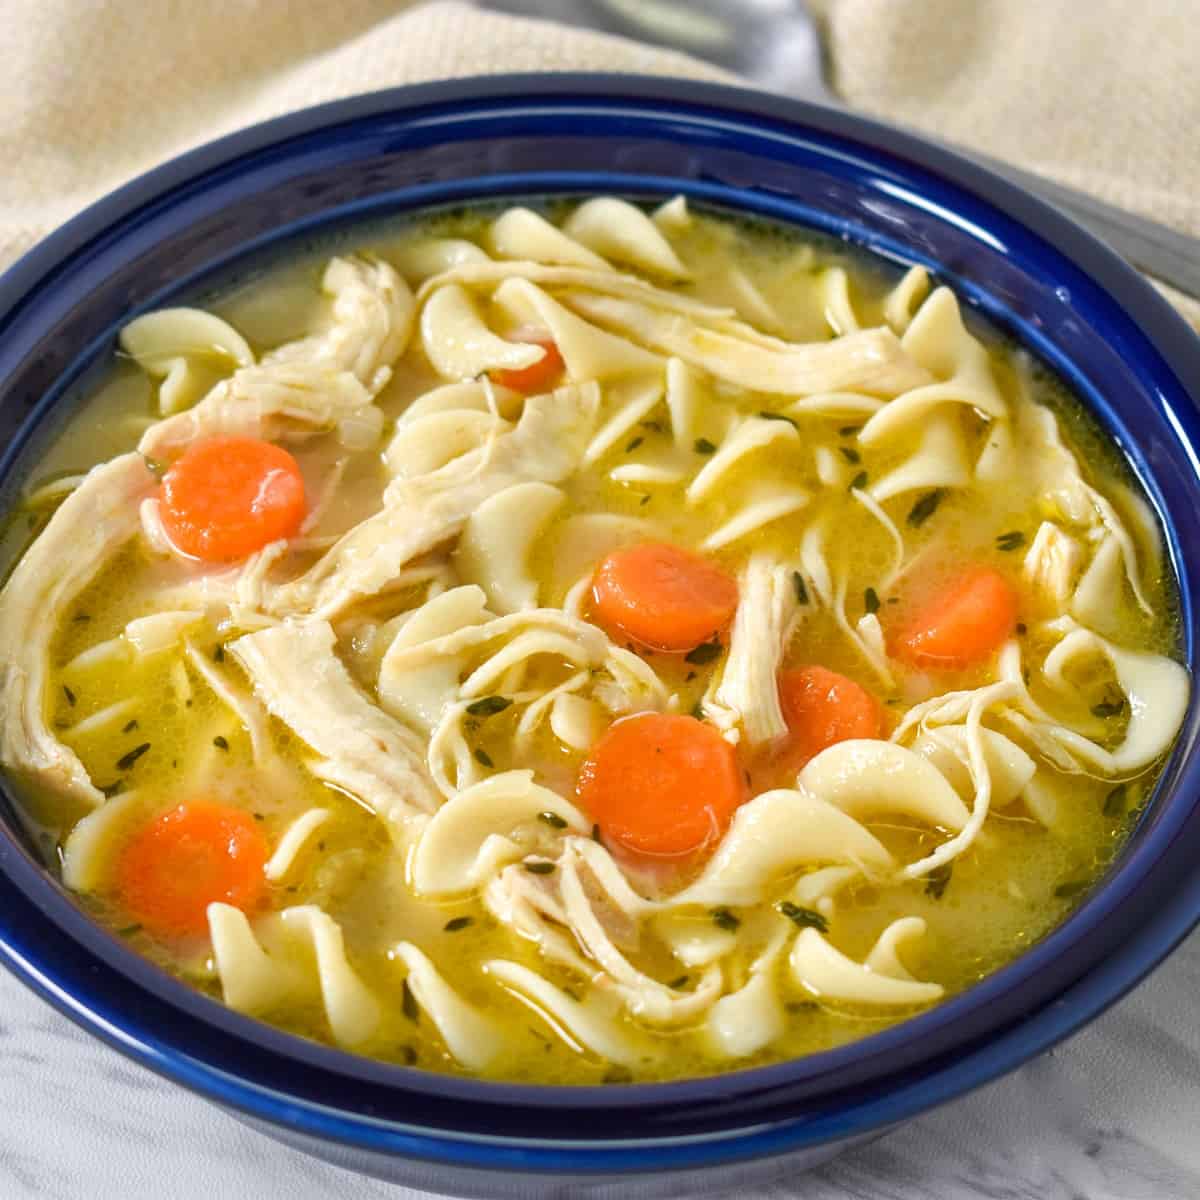 https://www.cook2eatwell.com/wp-content/uploads/2020/01/chicken-egg-noodle-soup-image.jpg